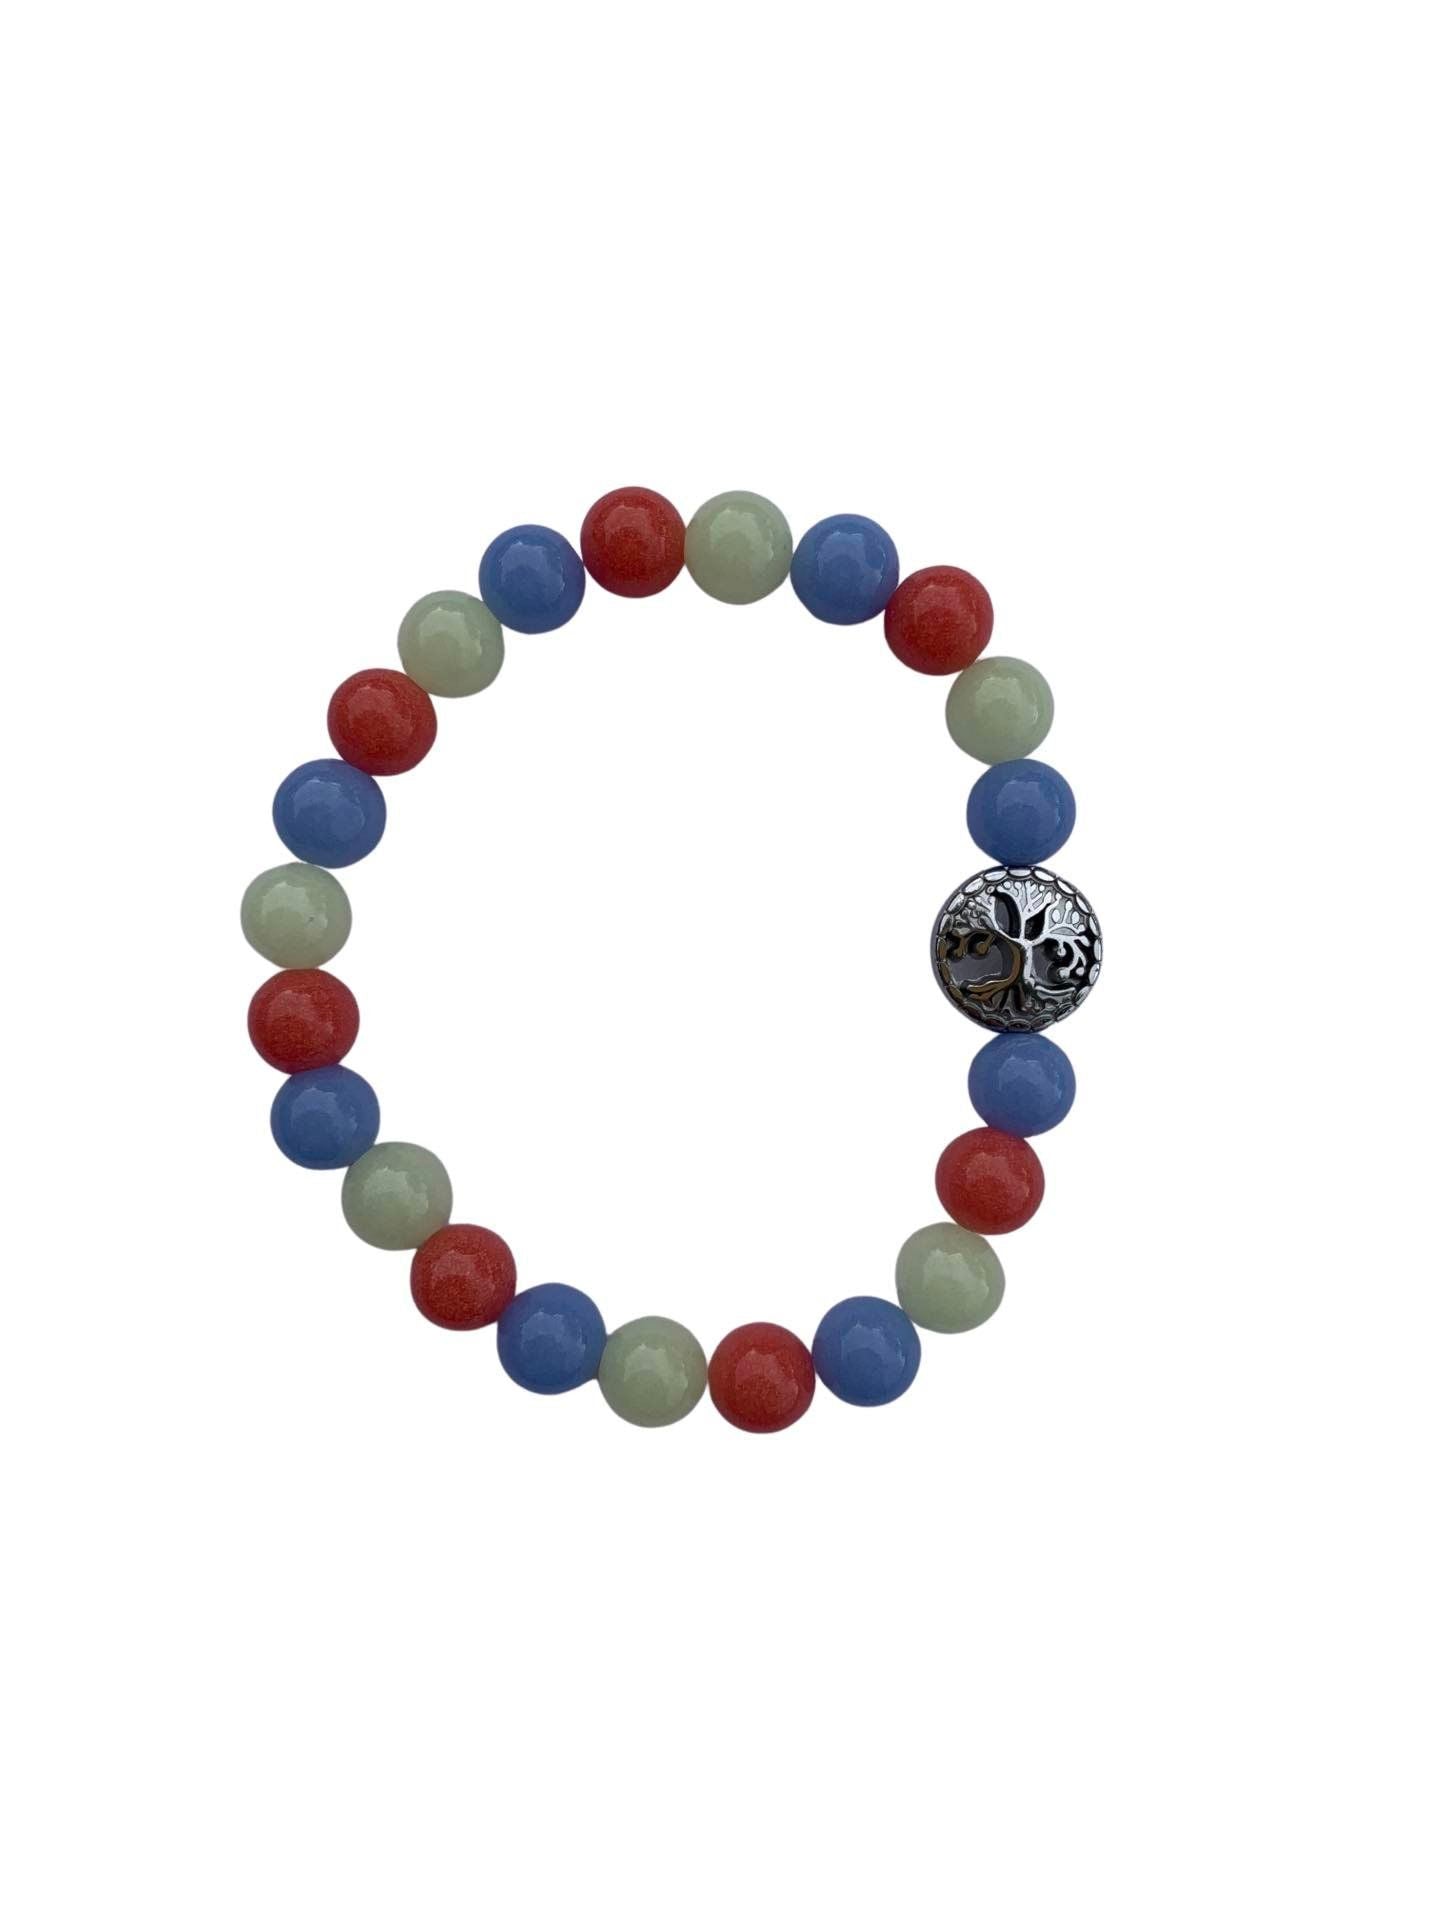 Aragonite Multi Bracelet 8 mm Round Beads - Naturally Glows in the Dark